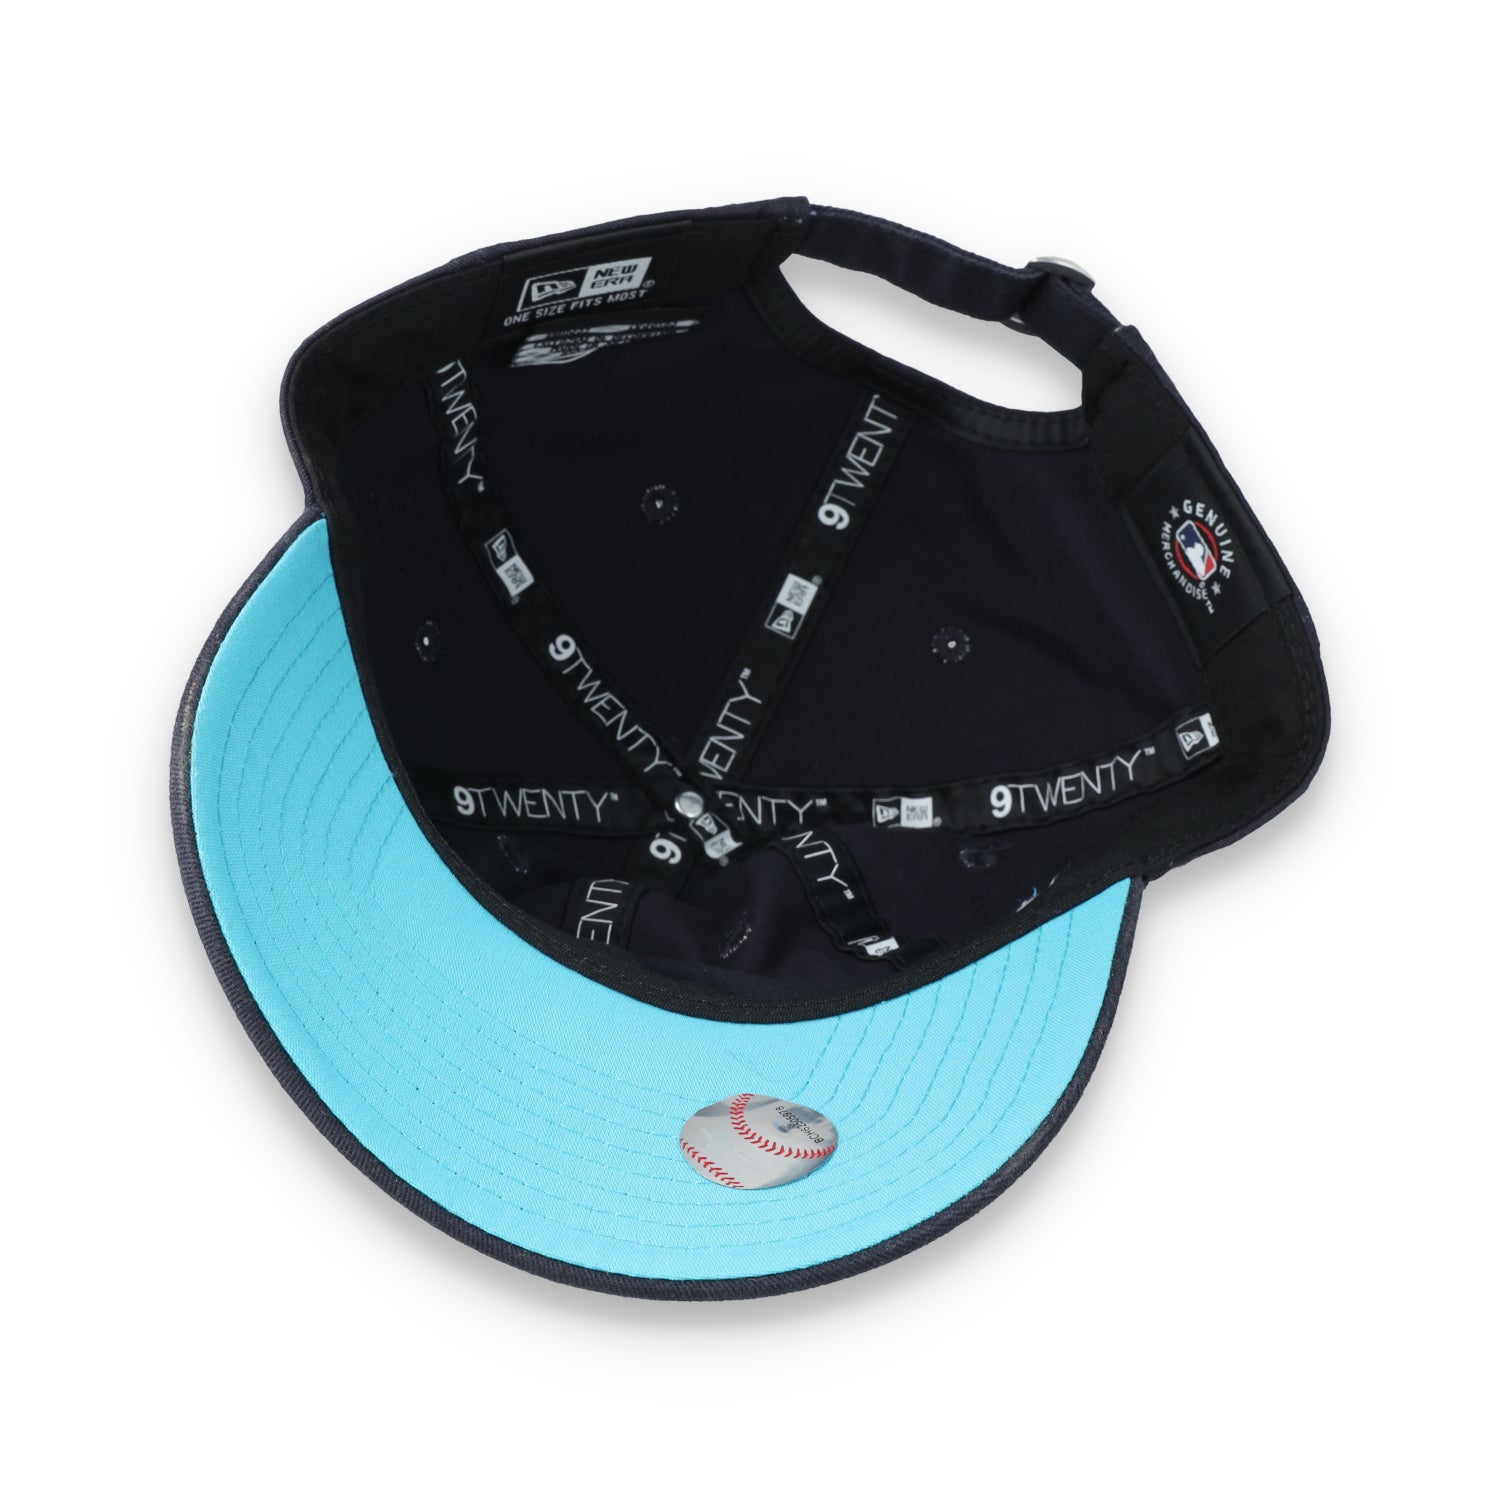 New York Yankees Fathers Day 9TWENTY Adjustable Hat